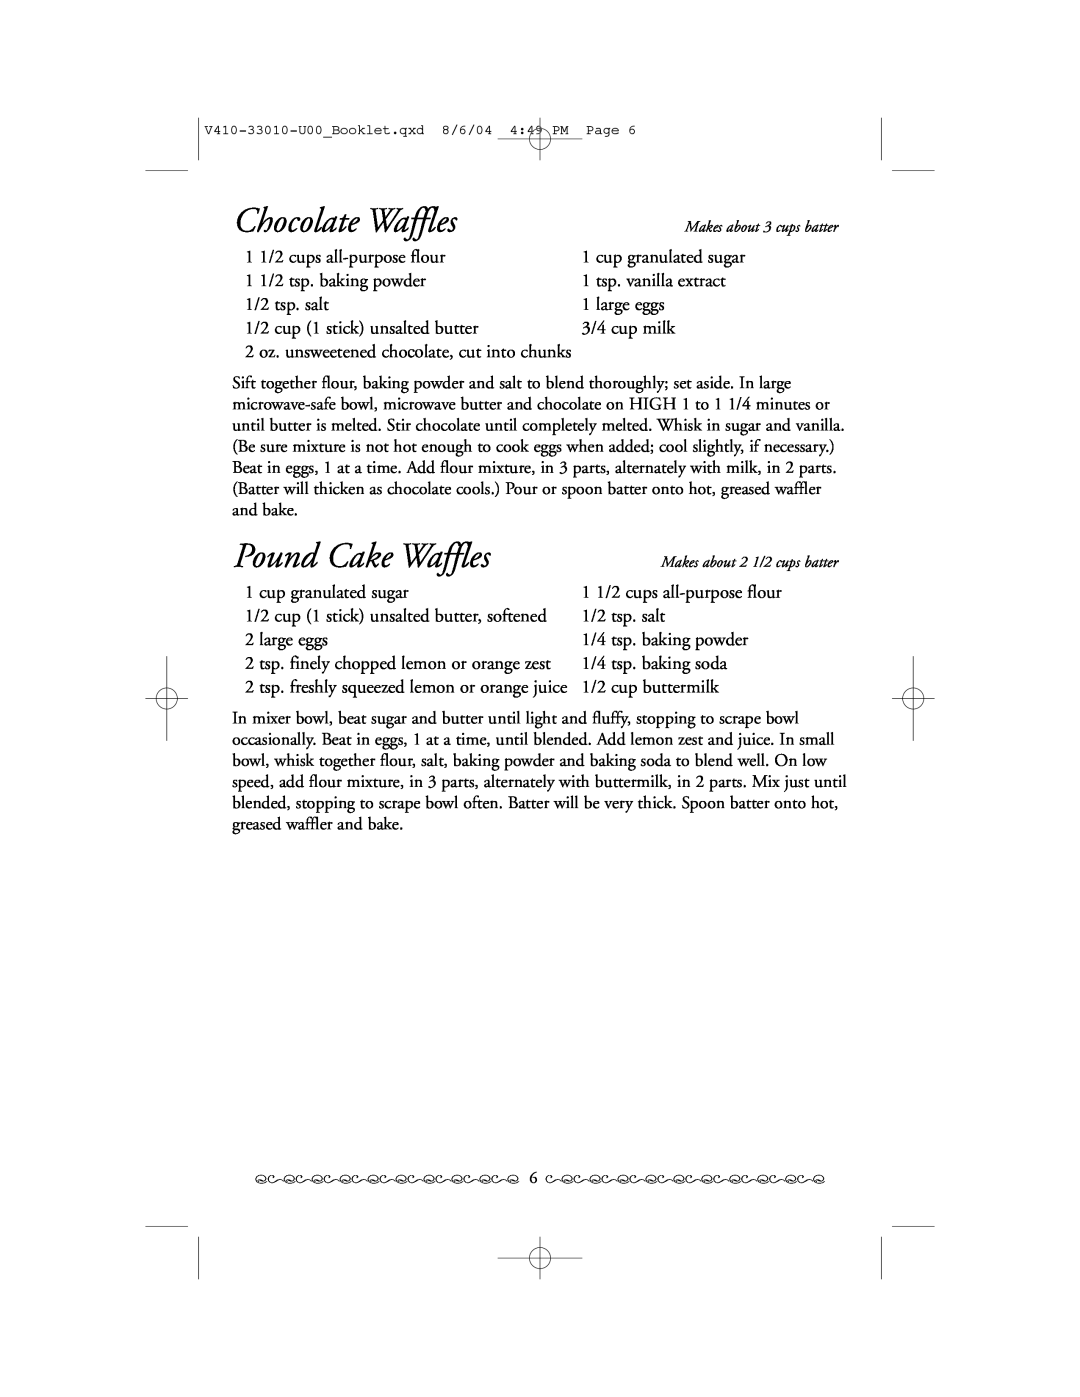 Villaware ROSE BOUQUET WAFFLER manual Chocolate Waffles, Pound Cake Waffles 